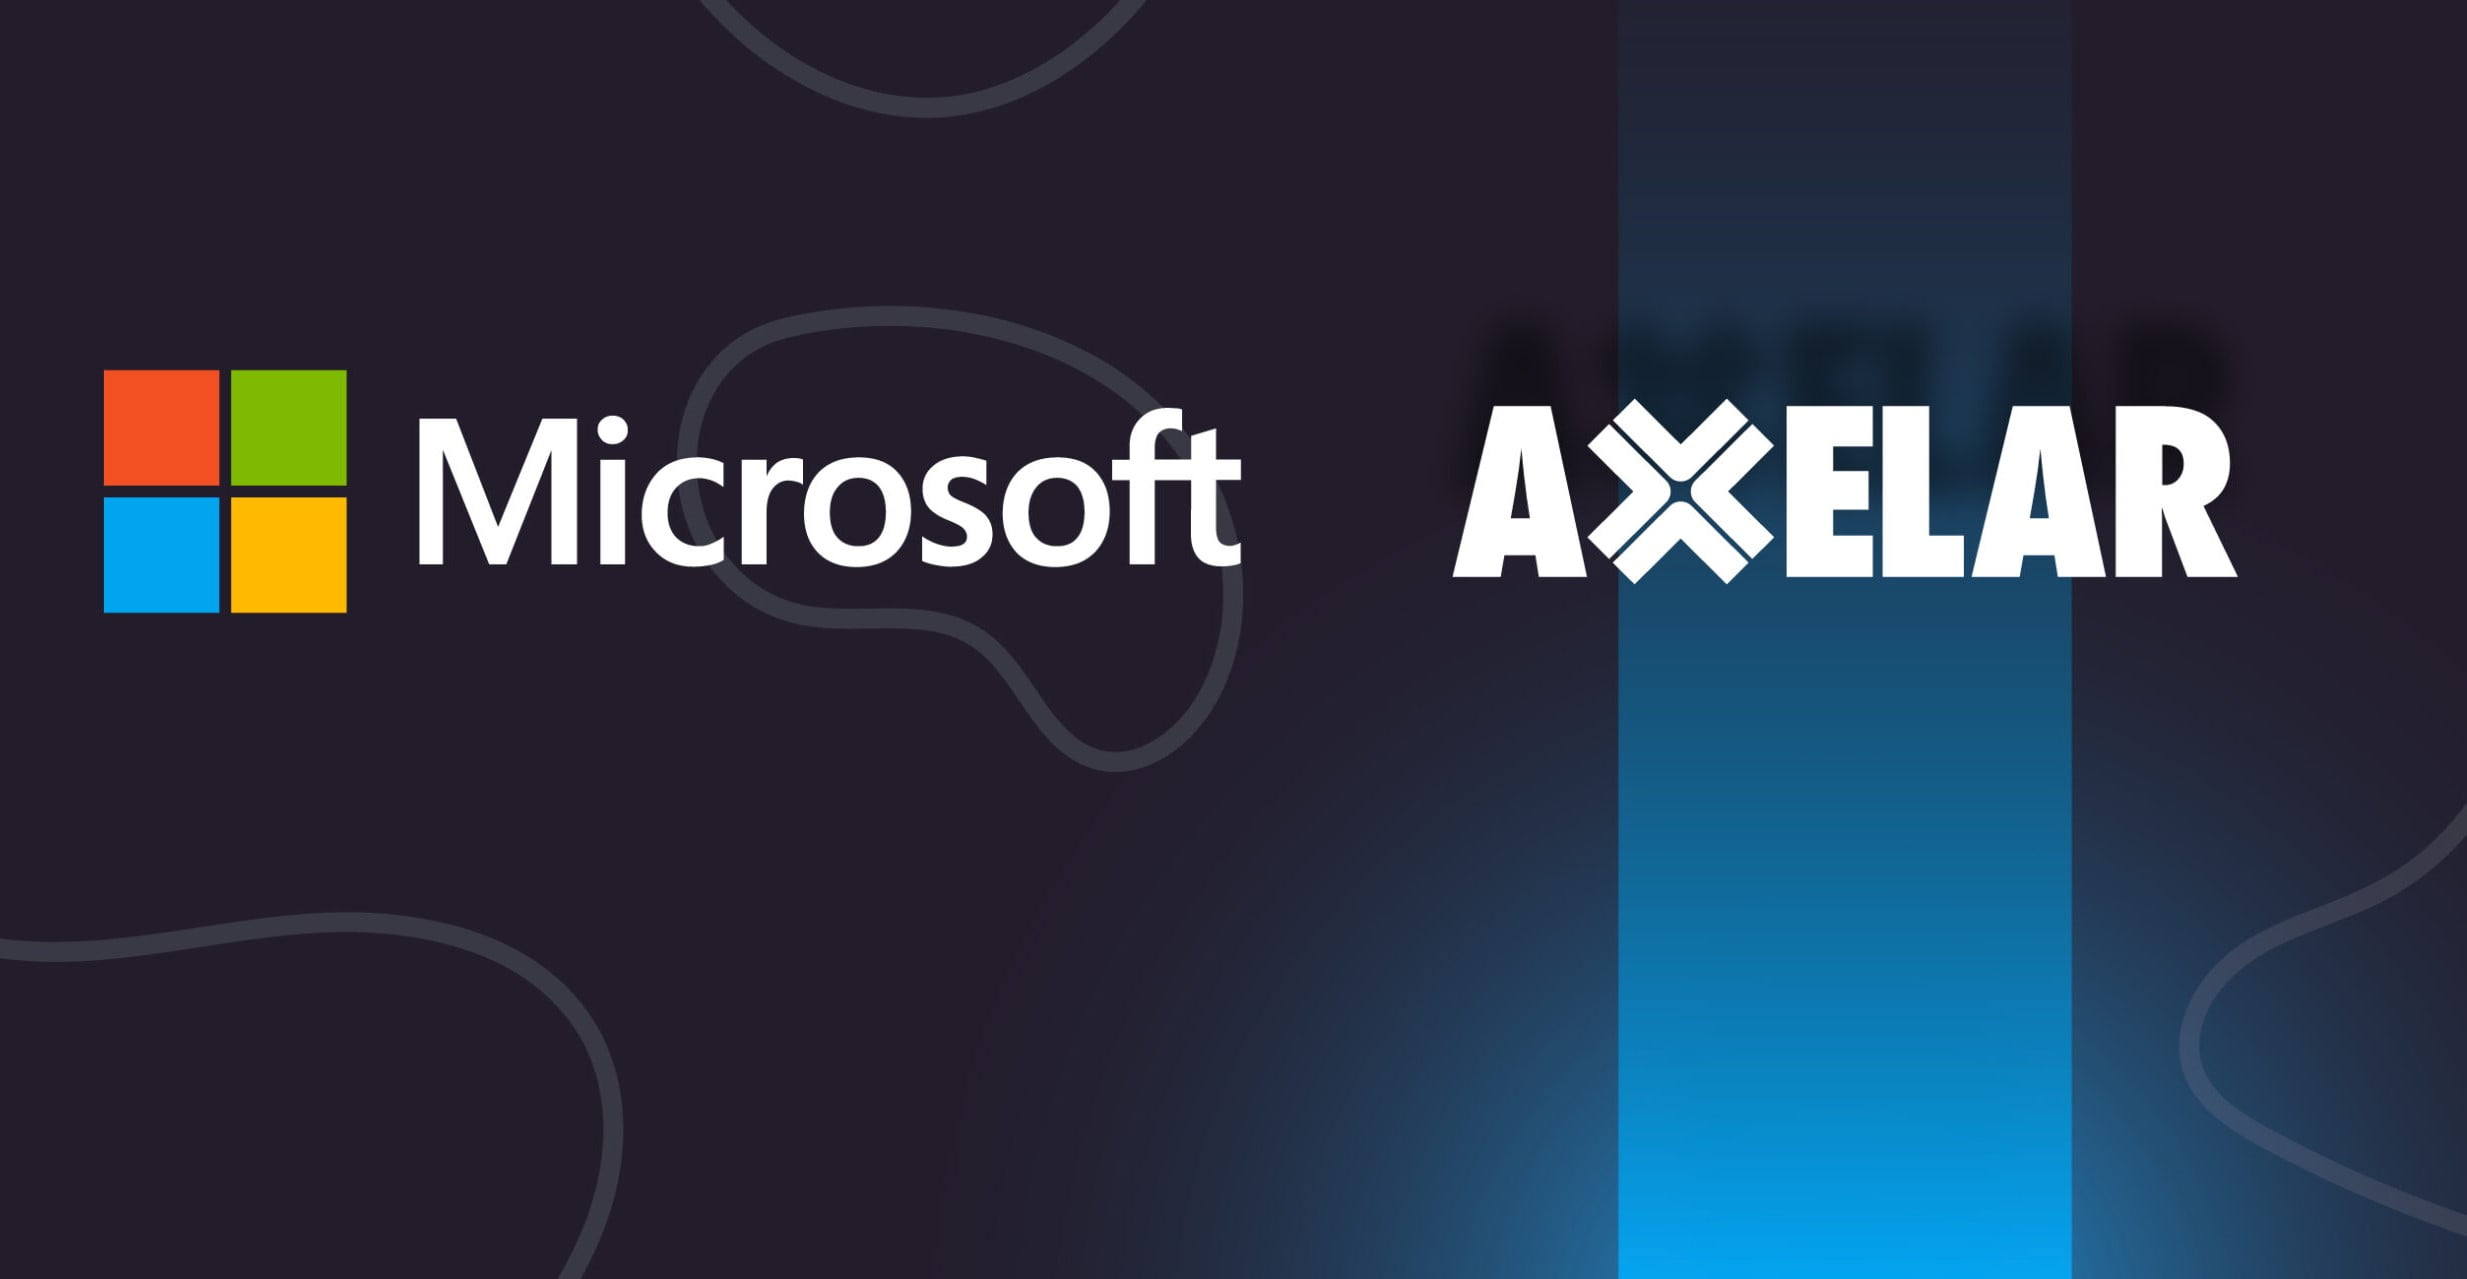 Microsoft Axelar Scaled 2